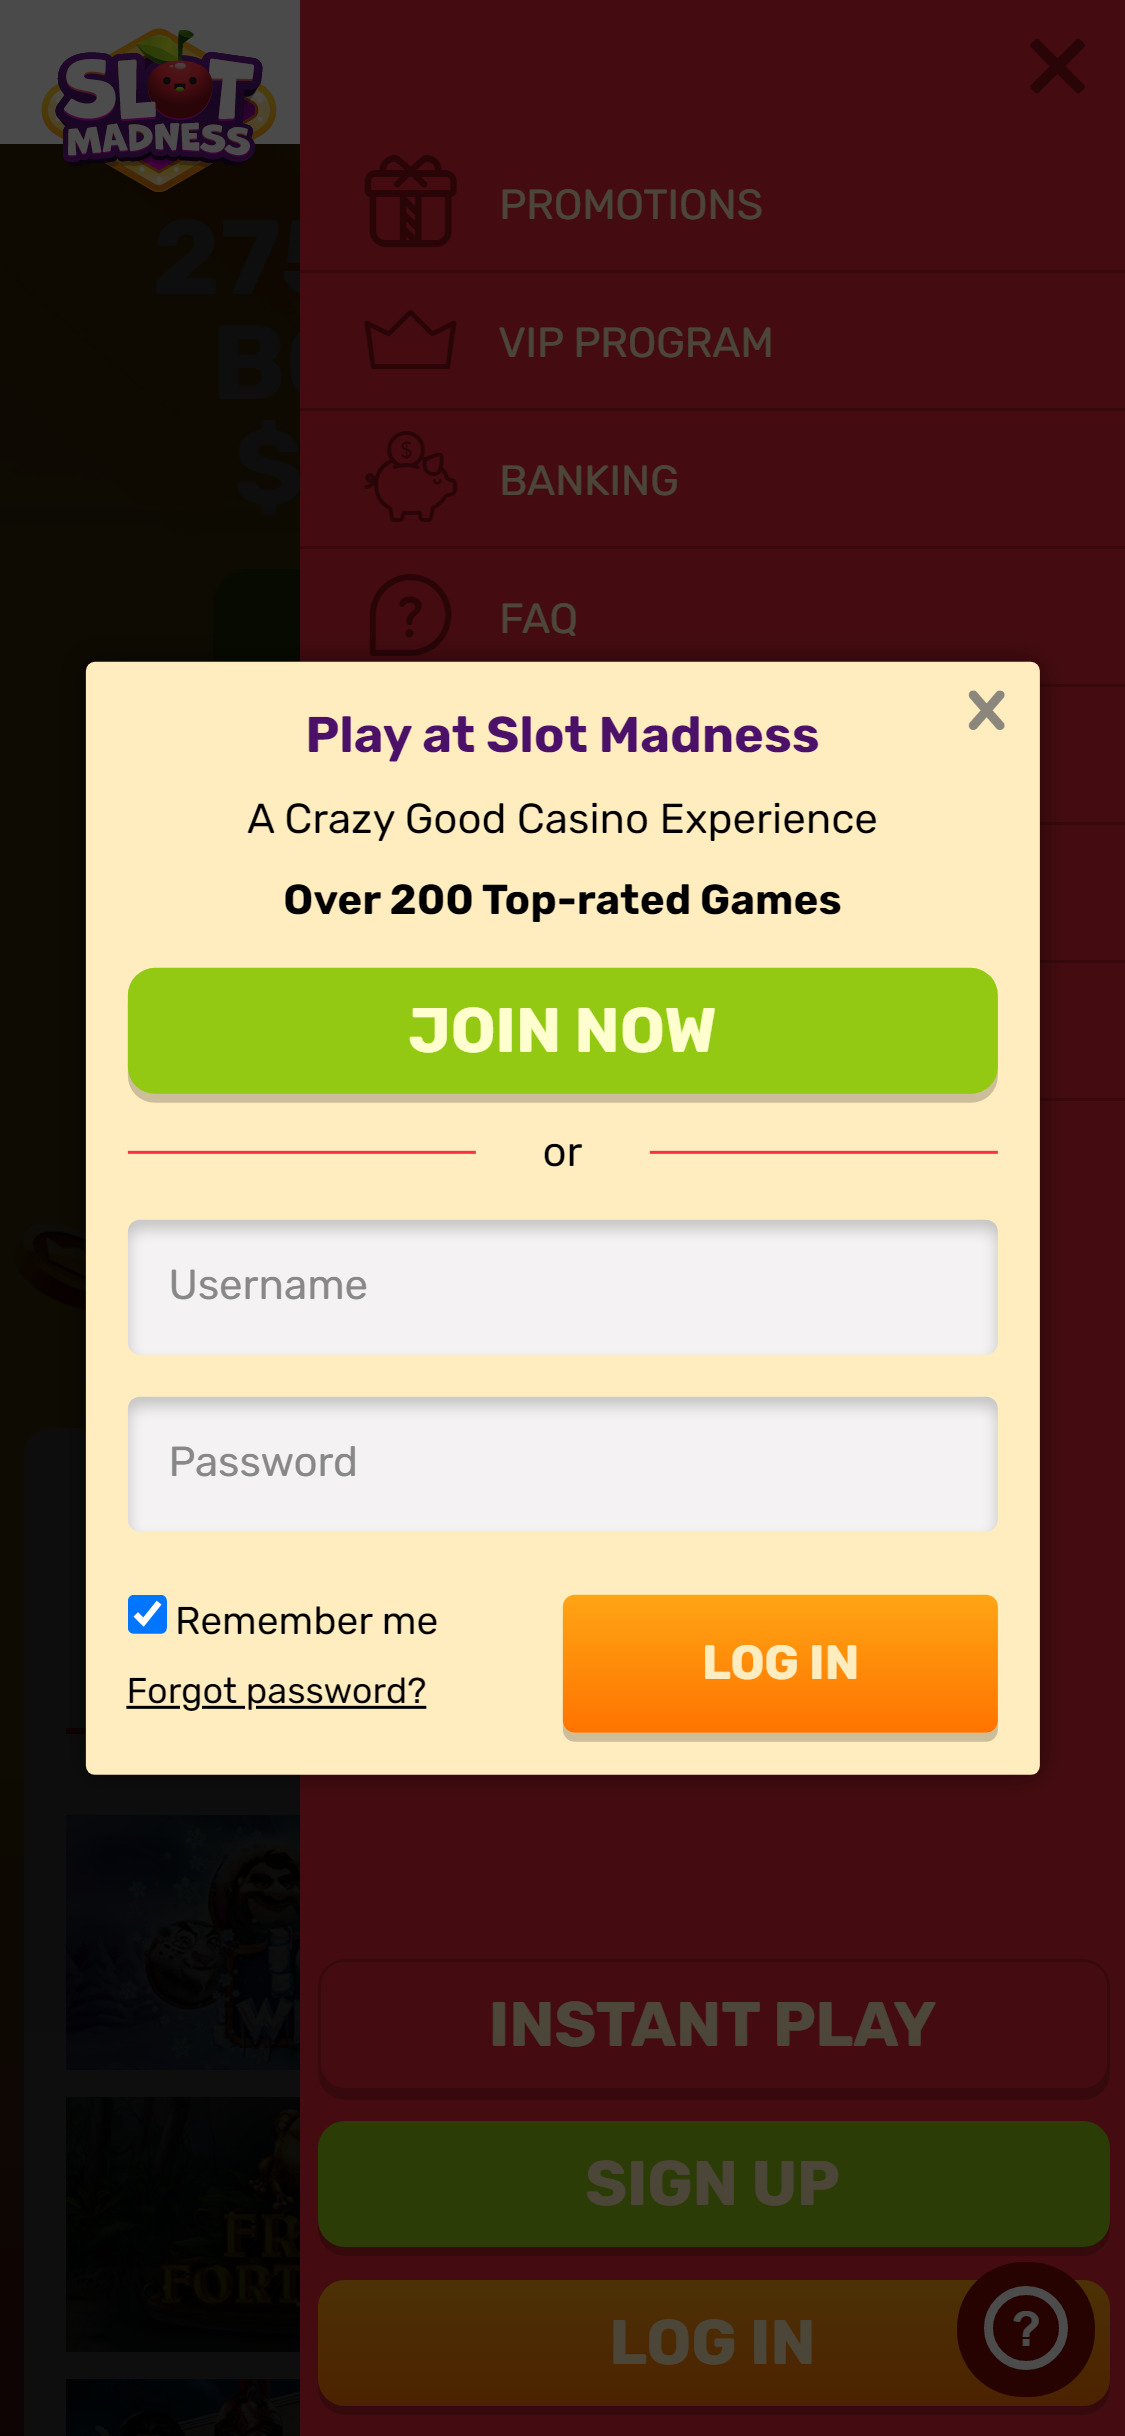 Slot Madness Casino Mobile Login Review